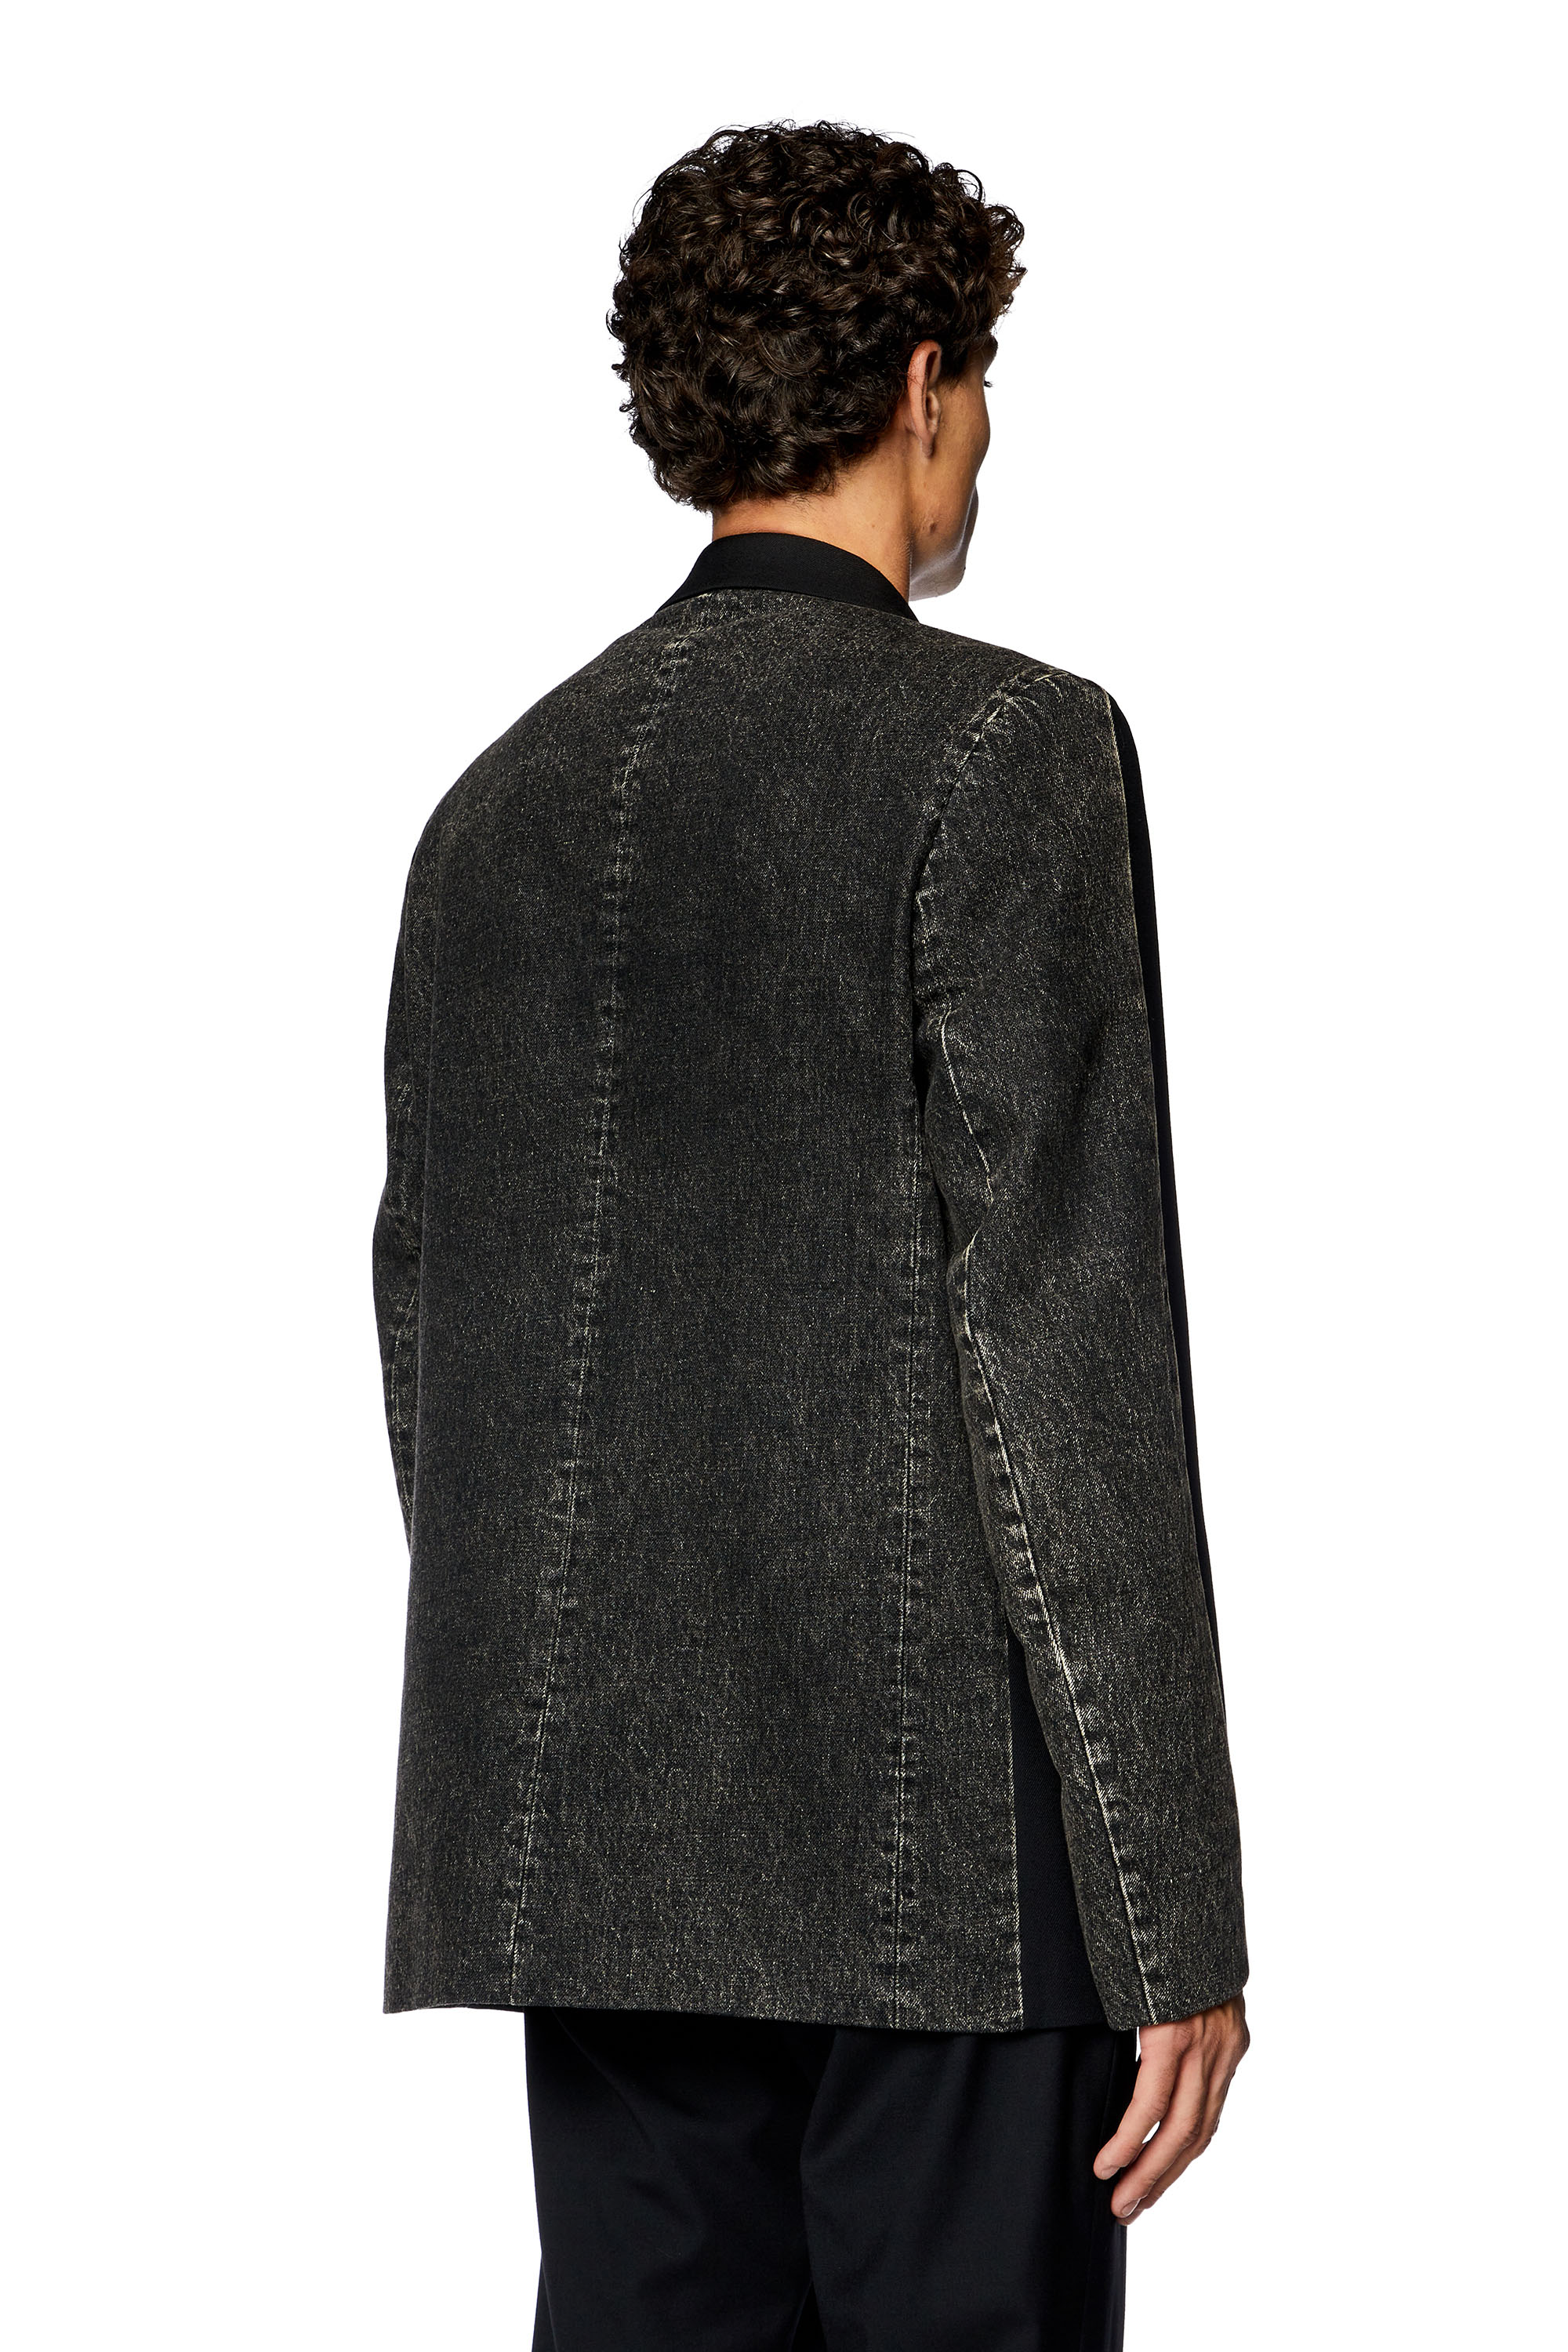 Diesel - J-WIRE-A, Man Hybrid blazer in cool wool and denim in Black - Image 4